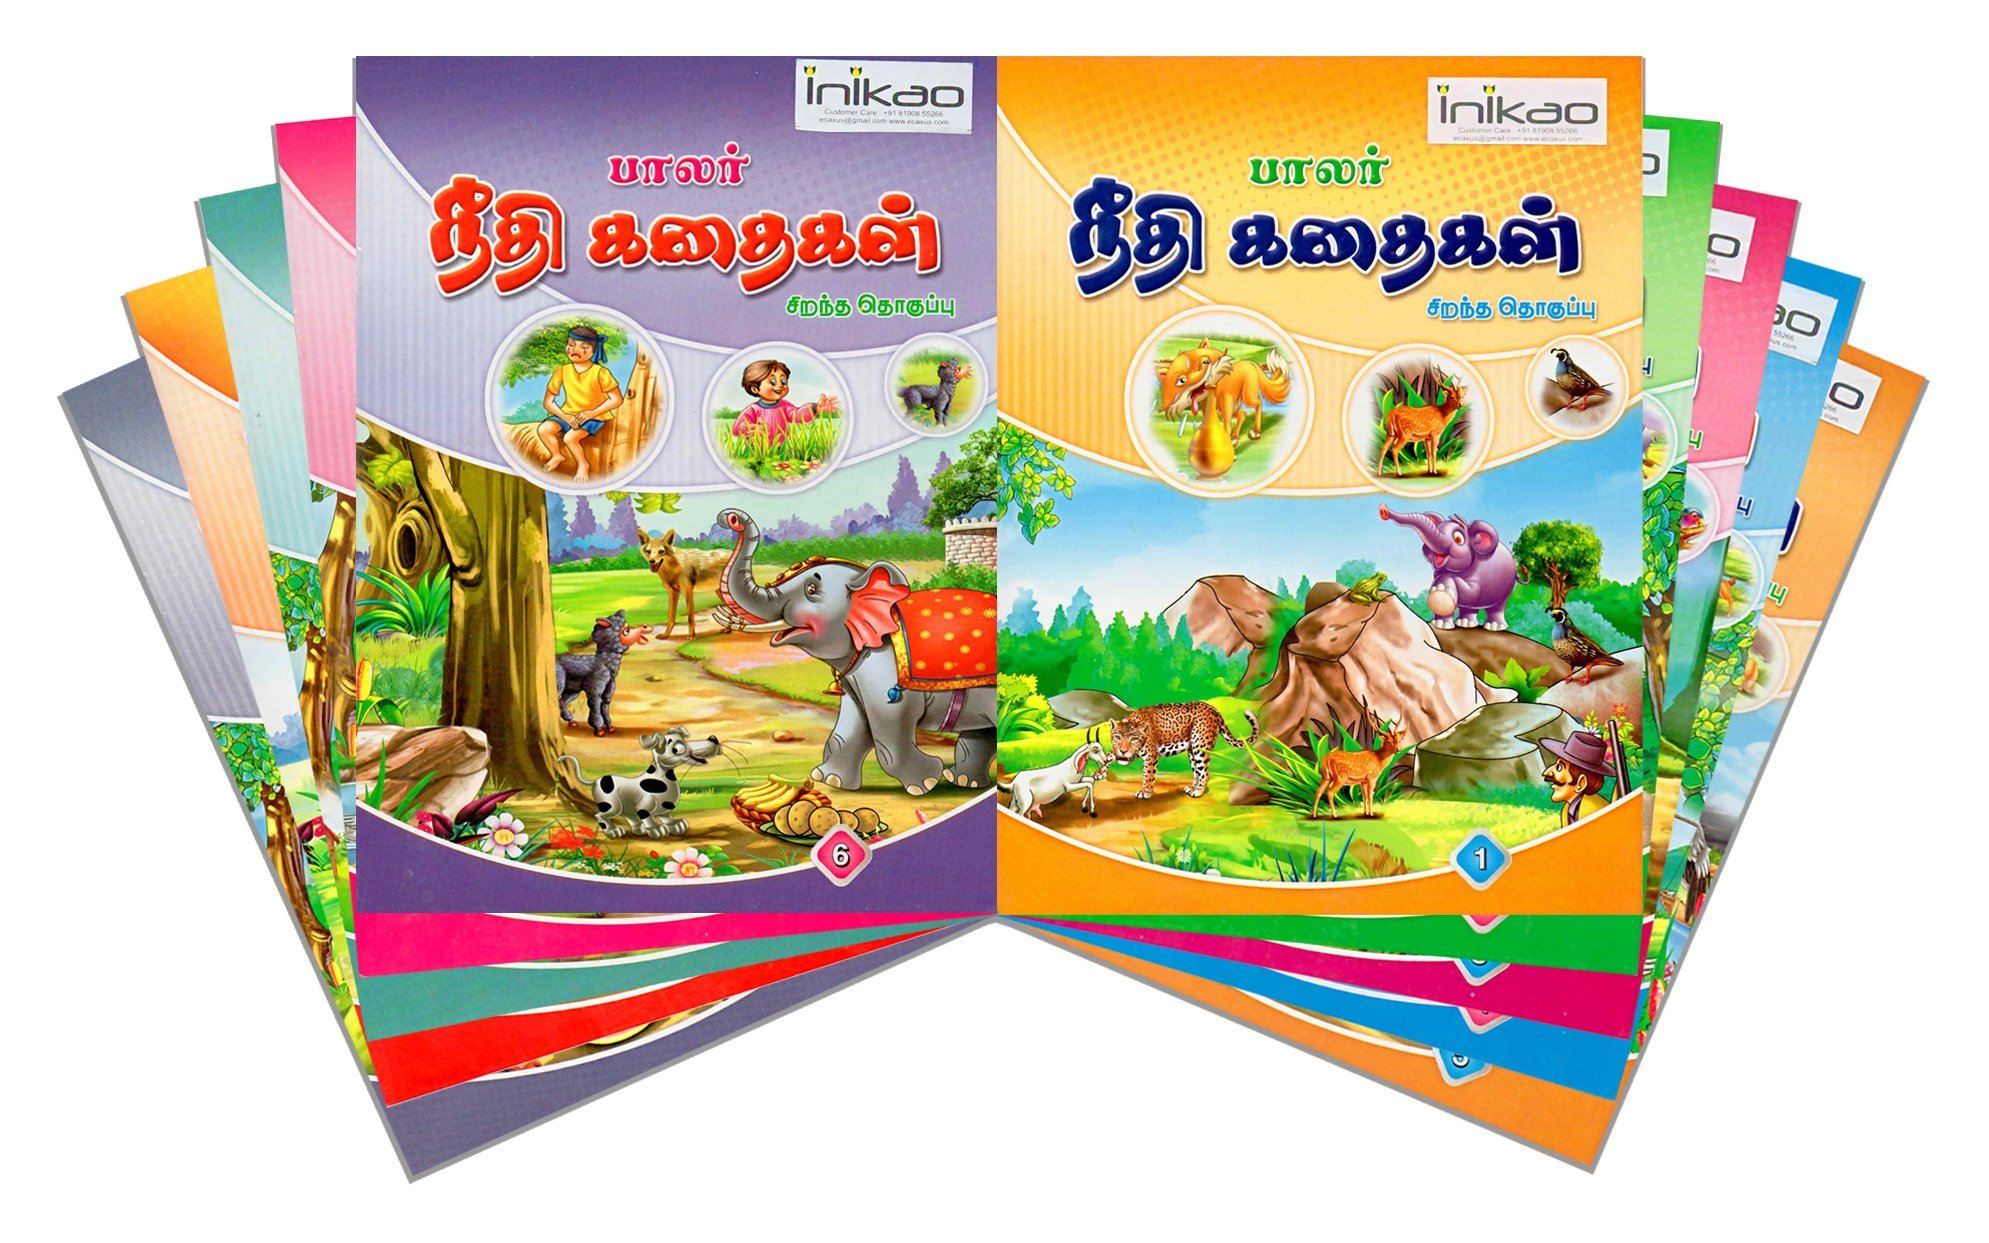 Tamil Story Books For Kids Flash Sales, 20 OFF   www.gruposincom.es